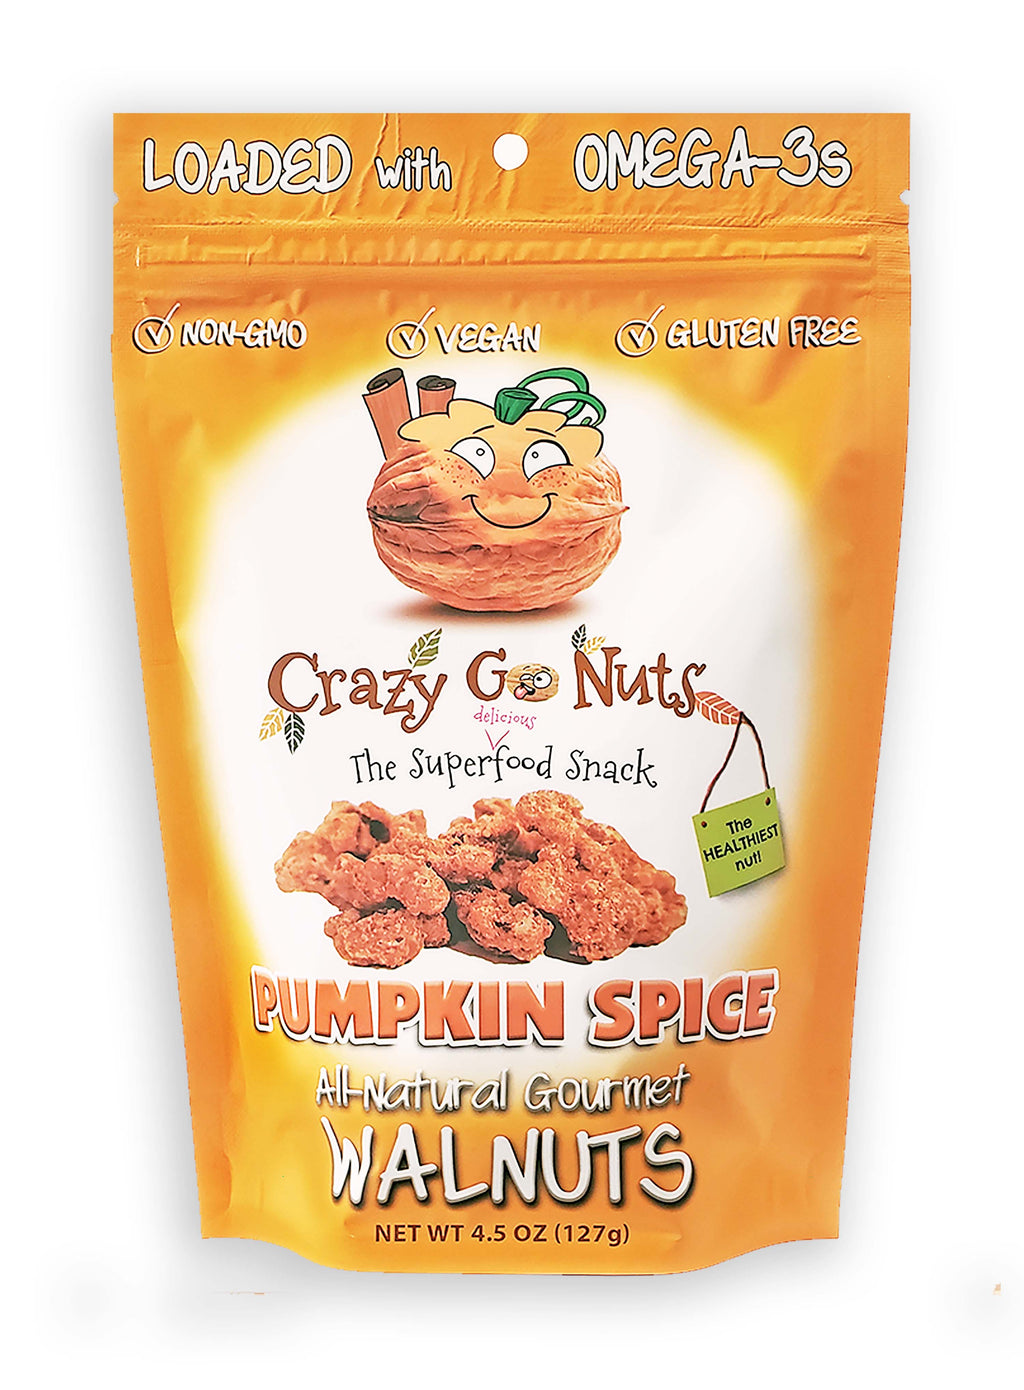 A bag of pumpkin spice walnut snacks